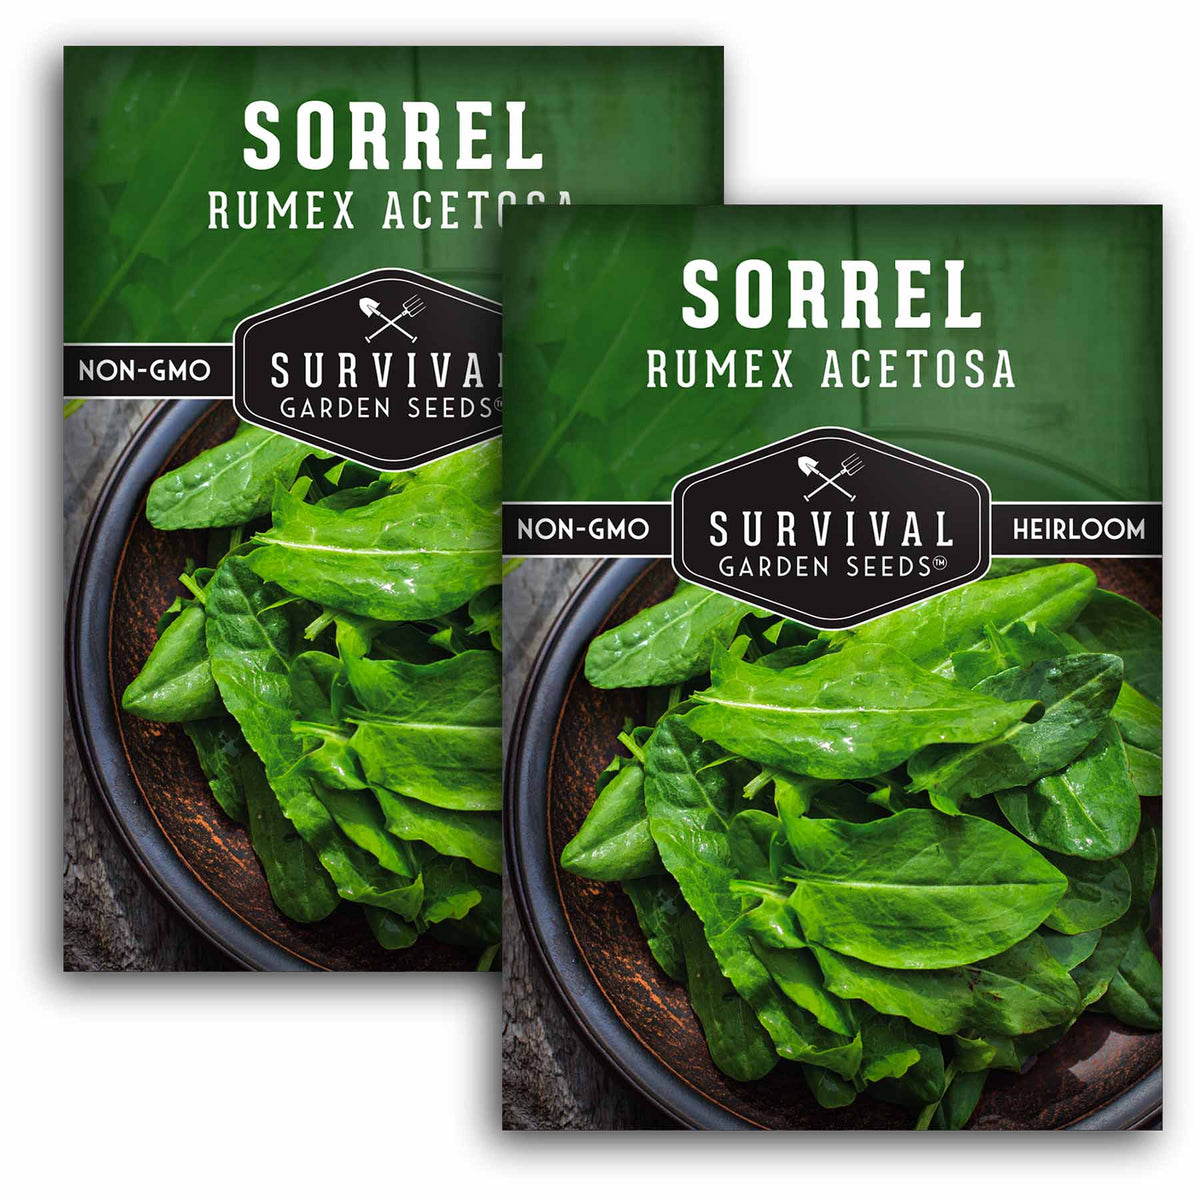 2 packets of Sorrel seeds